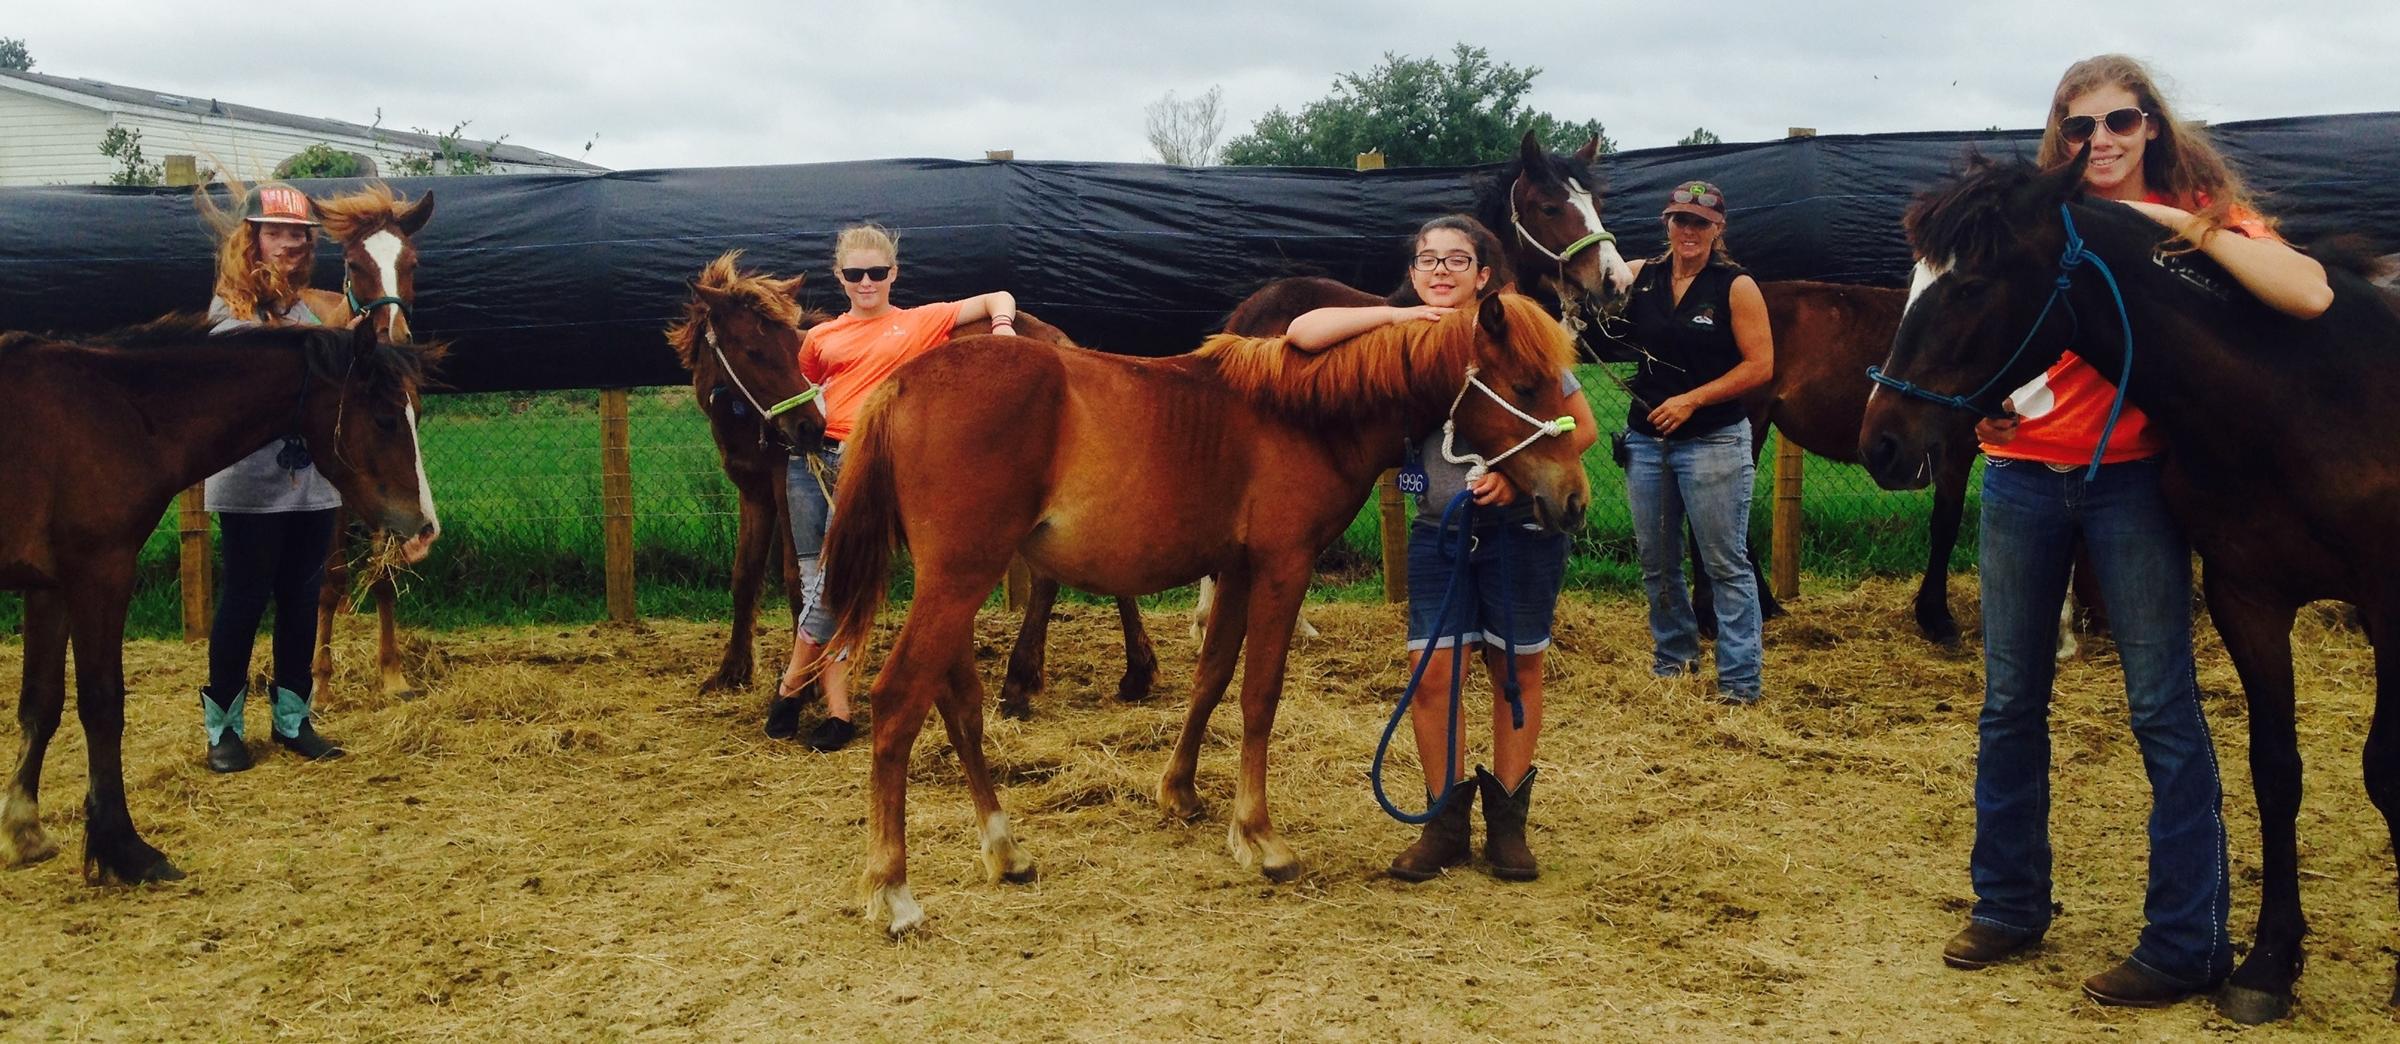 LaBelle Kids Tame Wild Horses For Adoption | WGCU News